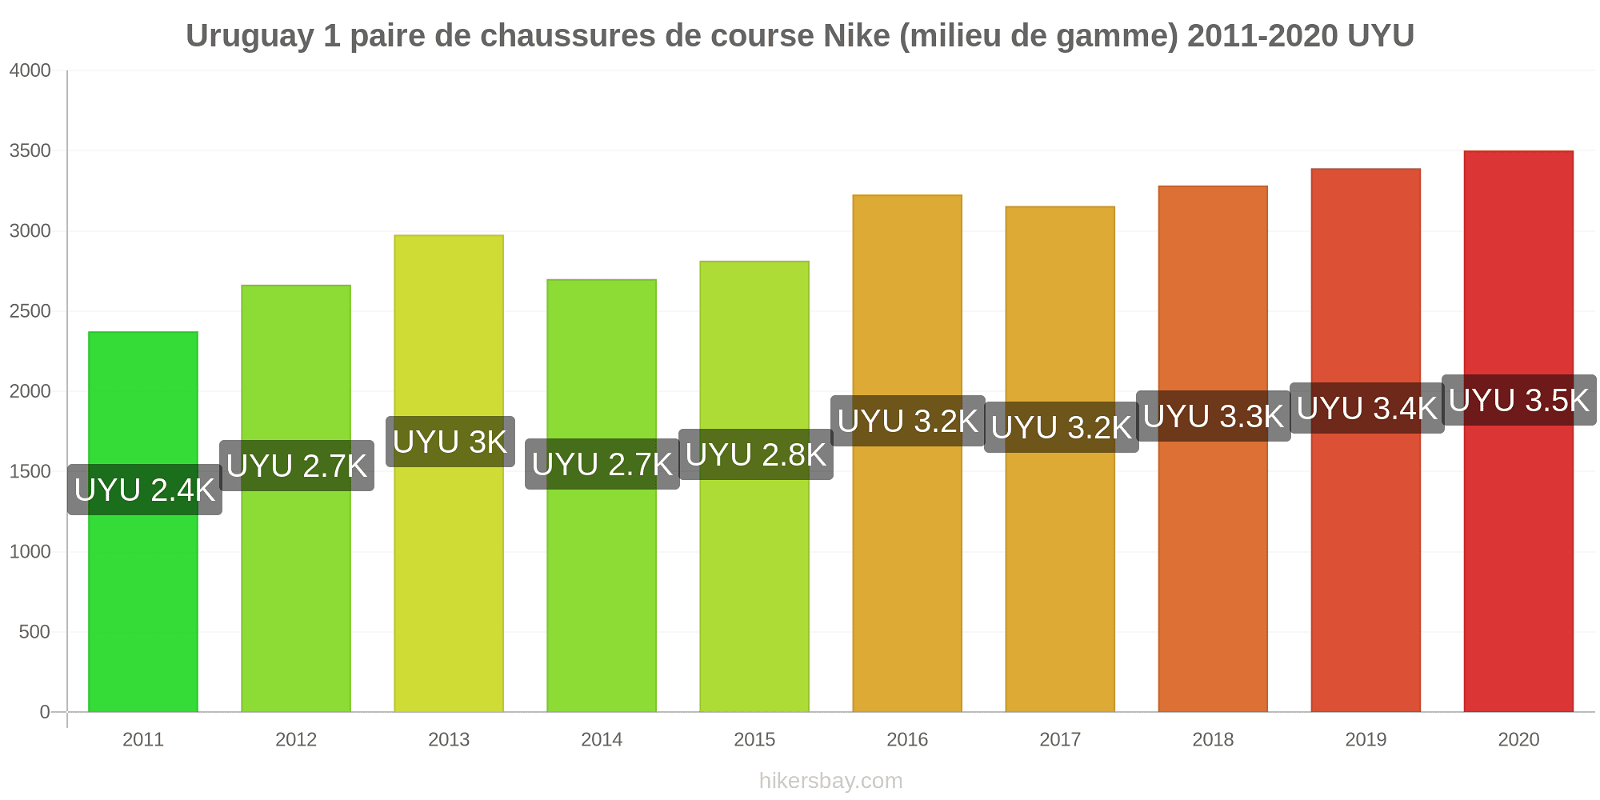 Uruguay changements de prix 1 paire de chaussures de course Nike (milieu de gamme) hikersbay.com